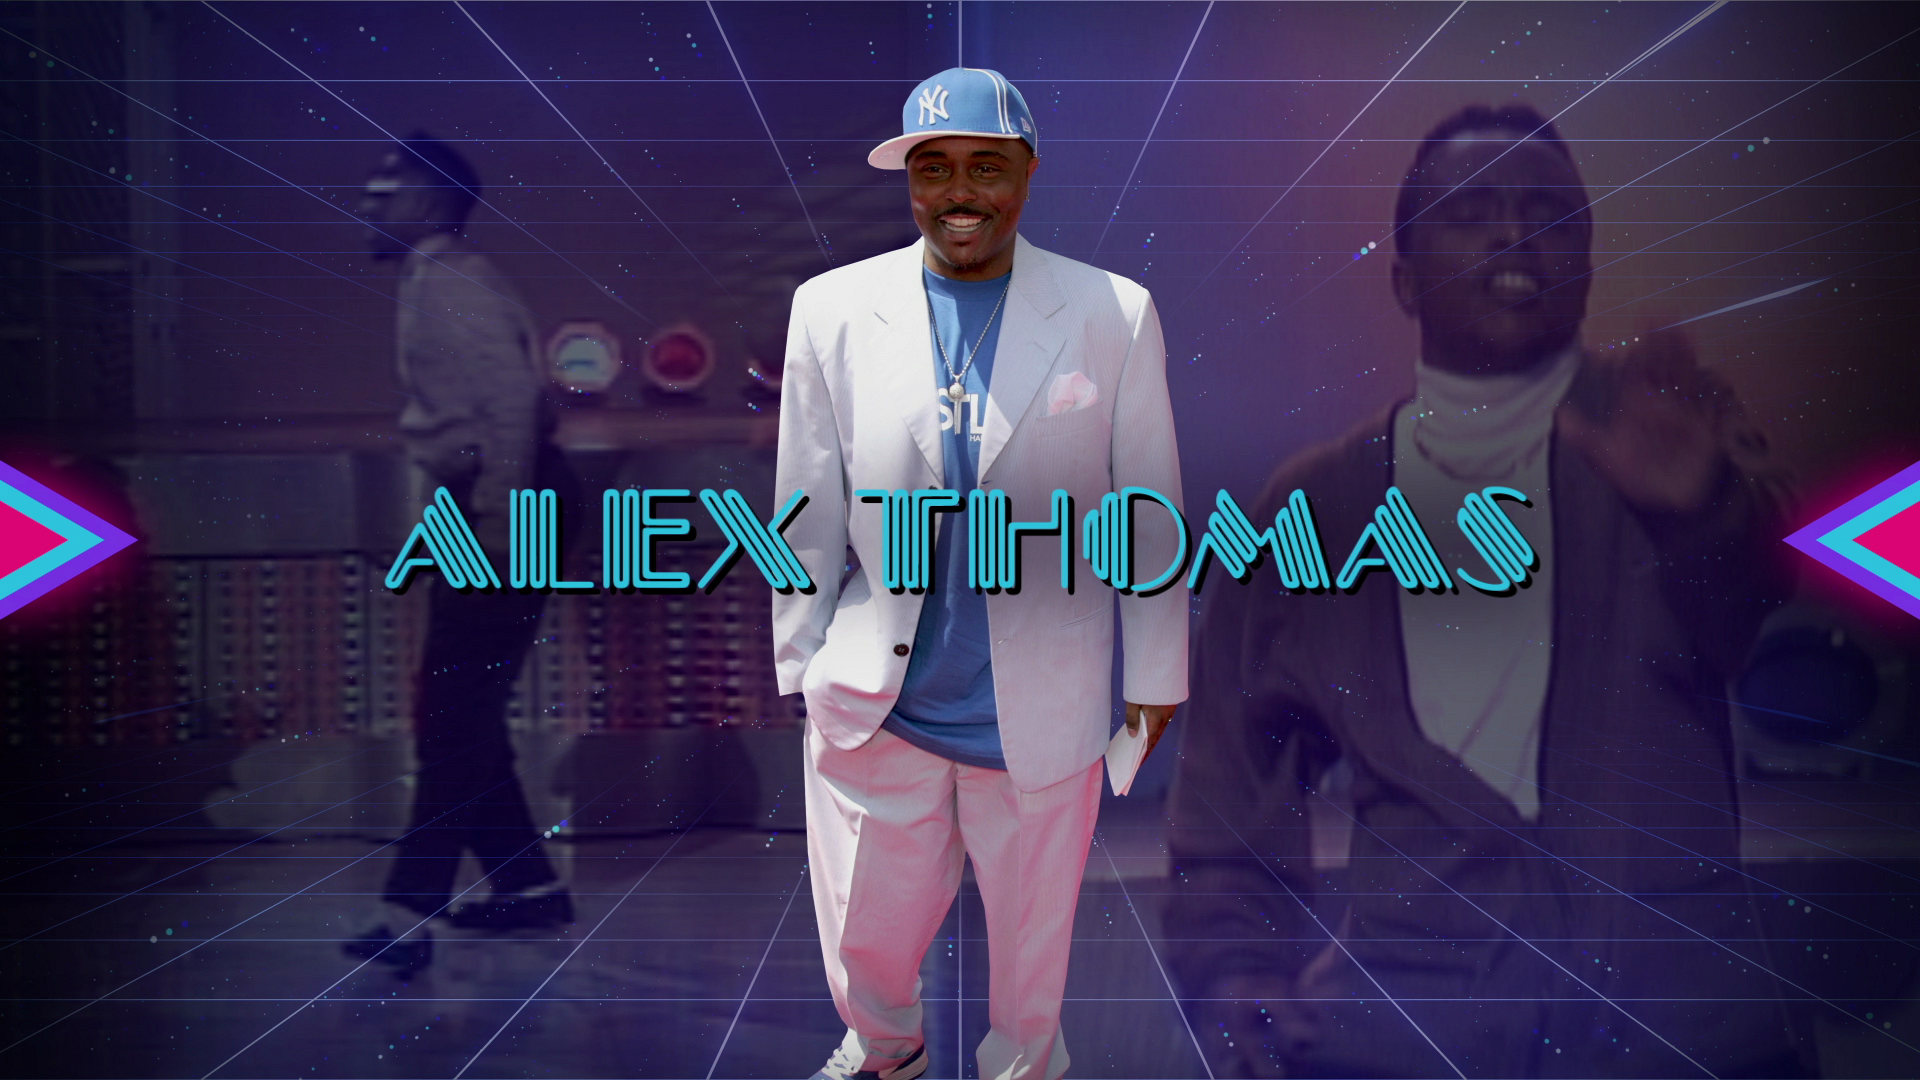 I Was a Soul Train Dancer - Alex Thomas - Soul Train Awards 2021 (Video